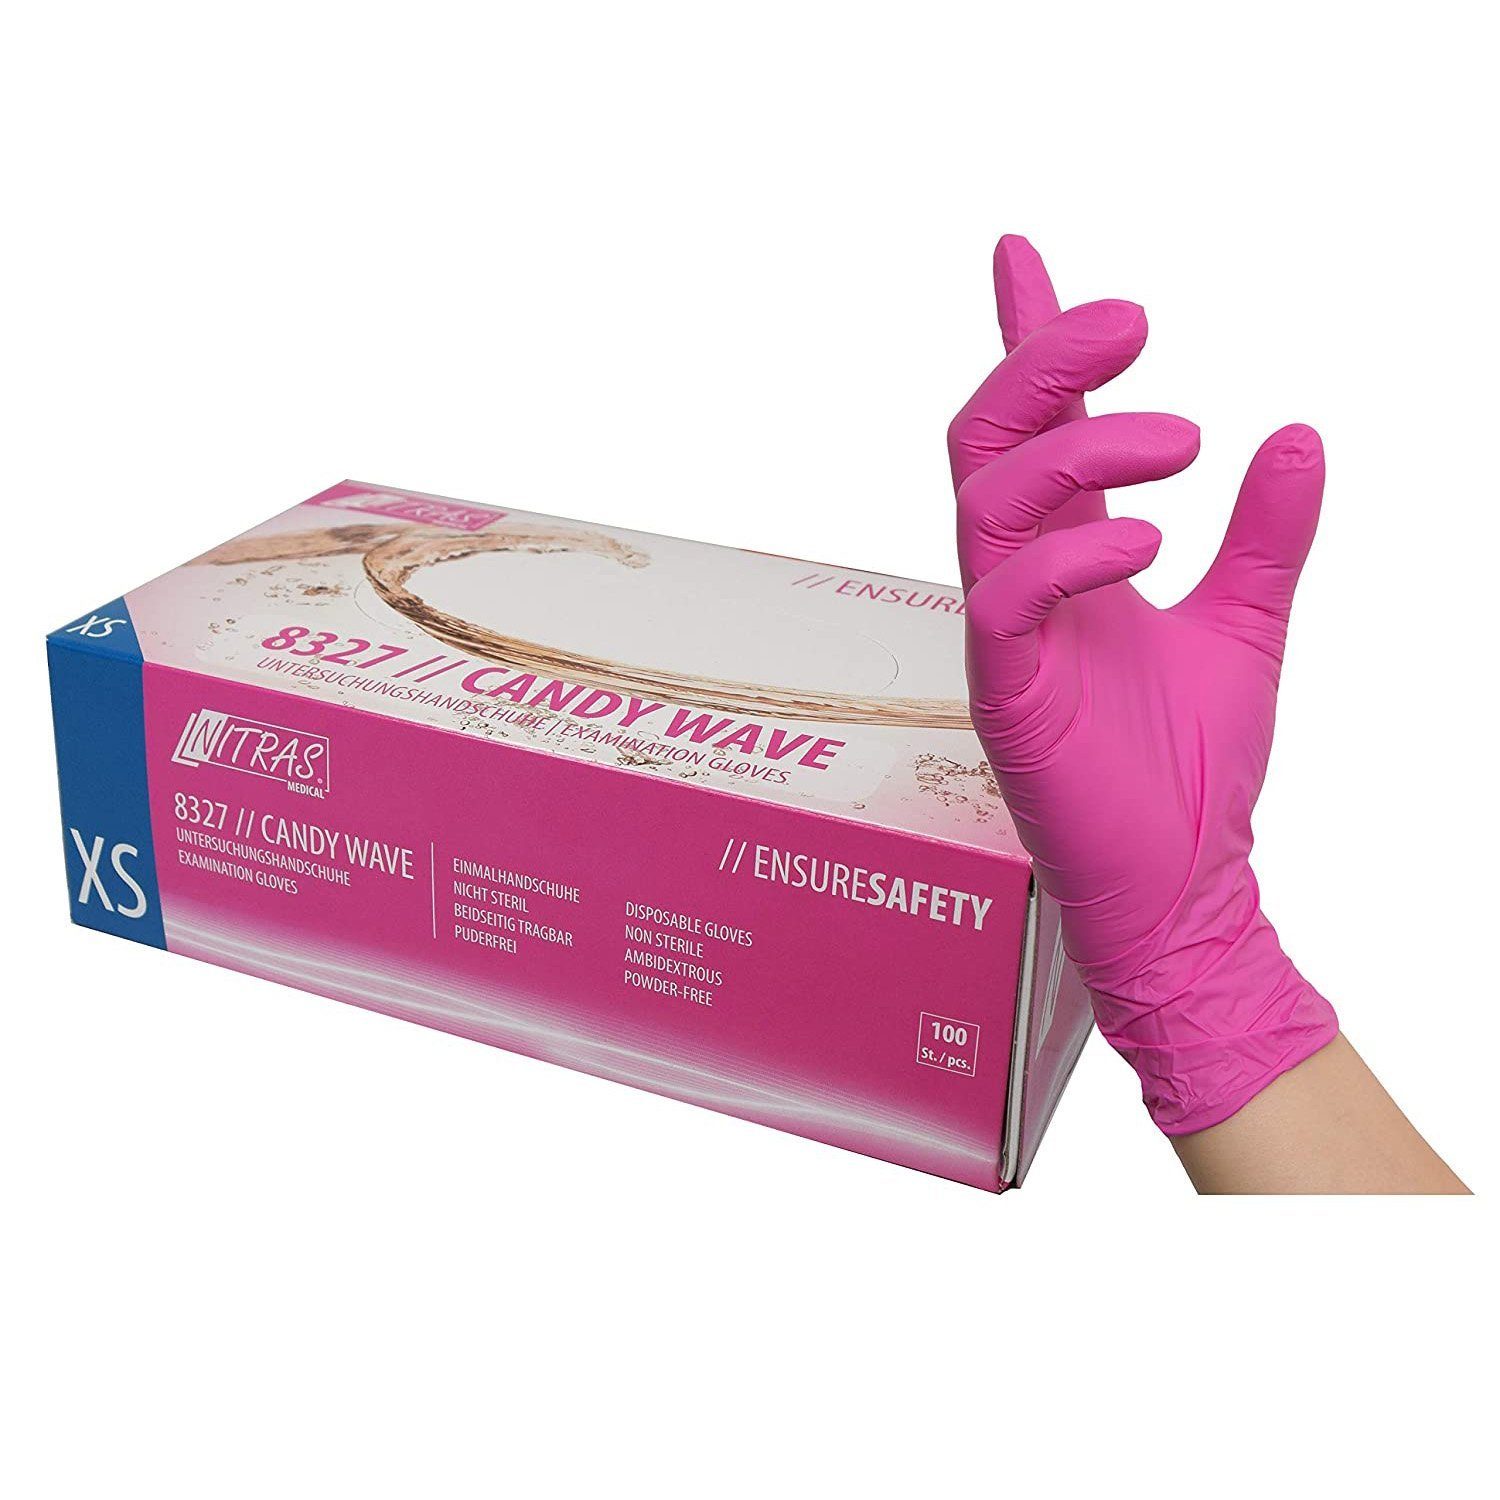 Nitras Einweghandschuhe Candy Wave Nitril-Handschuhe in Spender-Box – pude 40